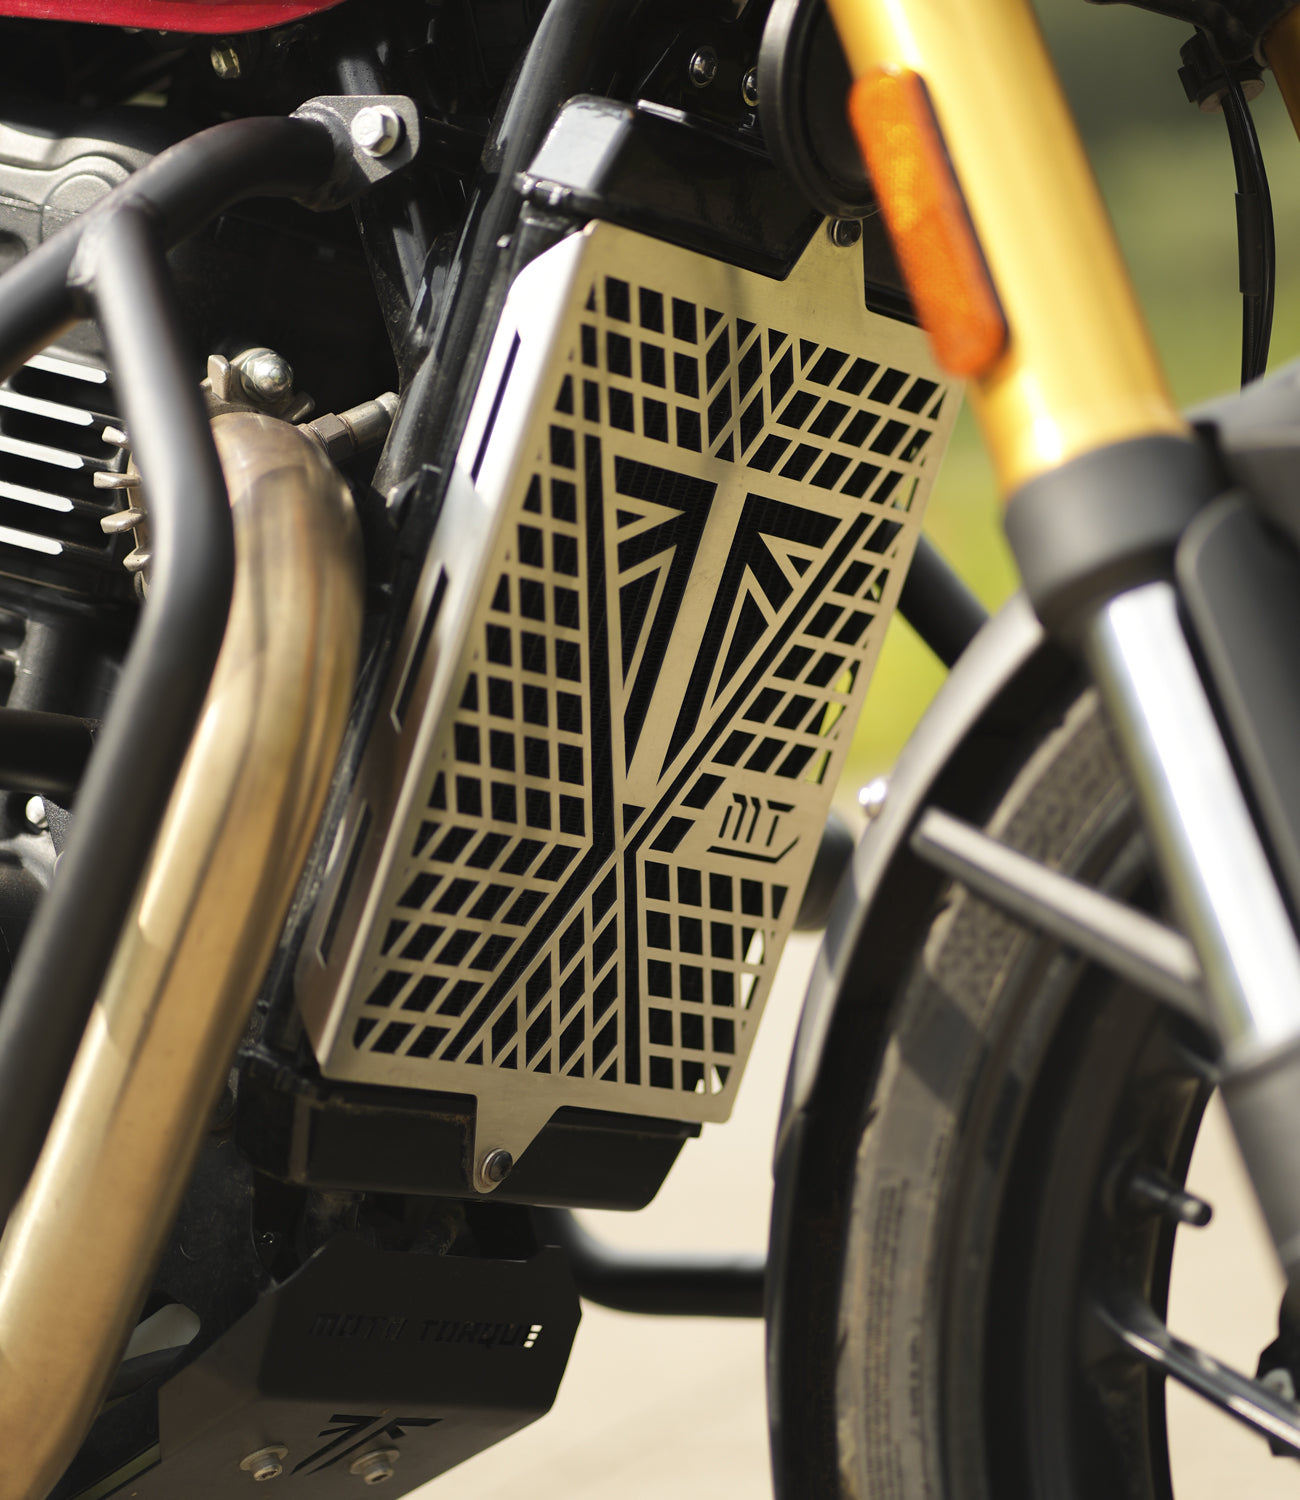 Moto Torque Triumph Scrambler 400 X - Radiator Guard